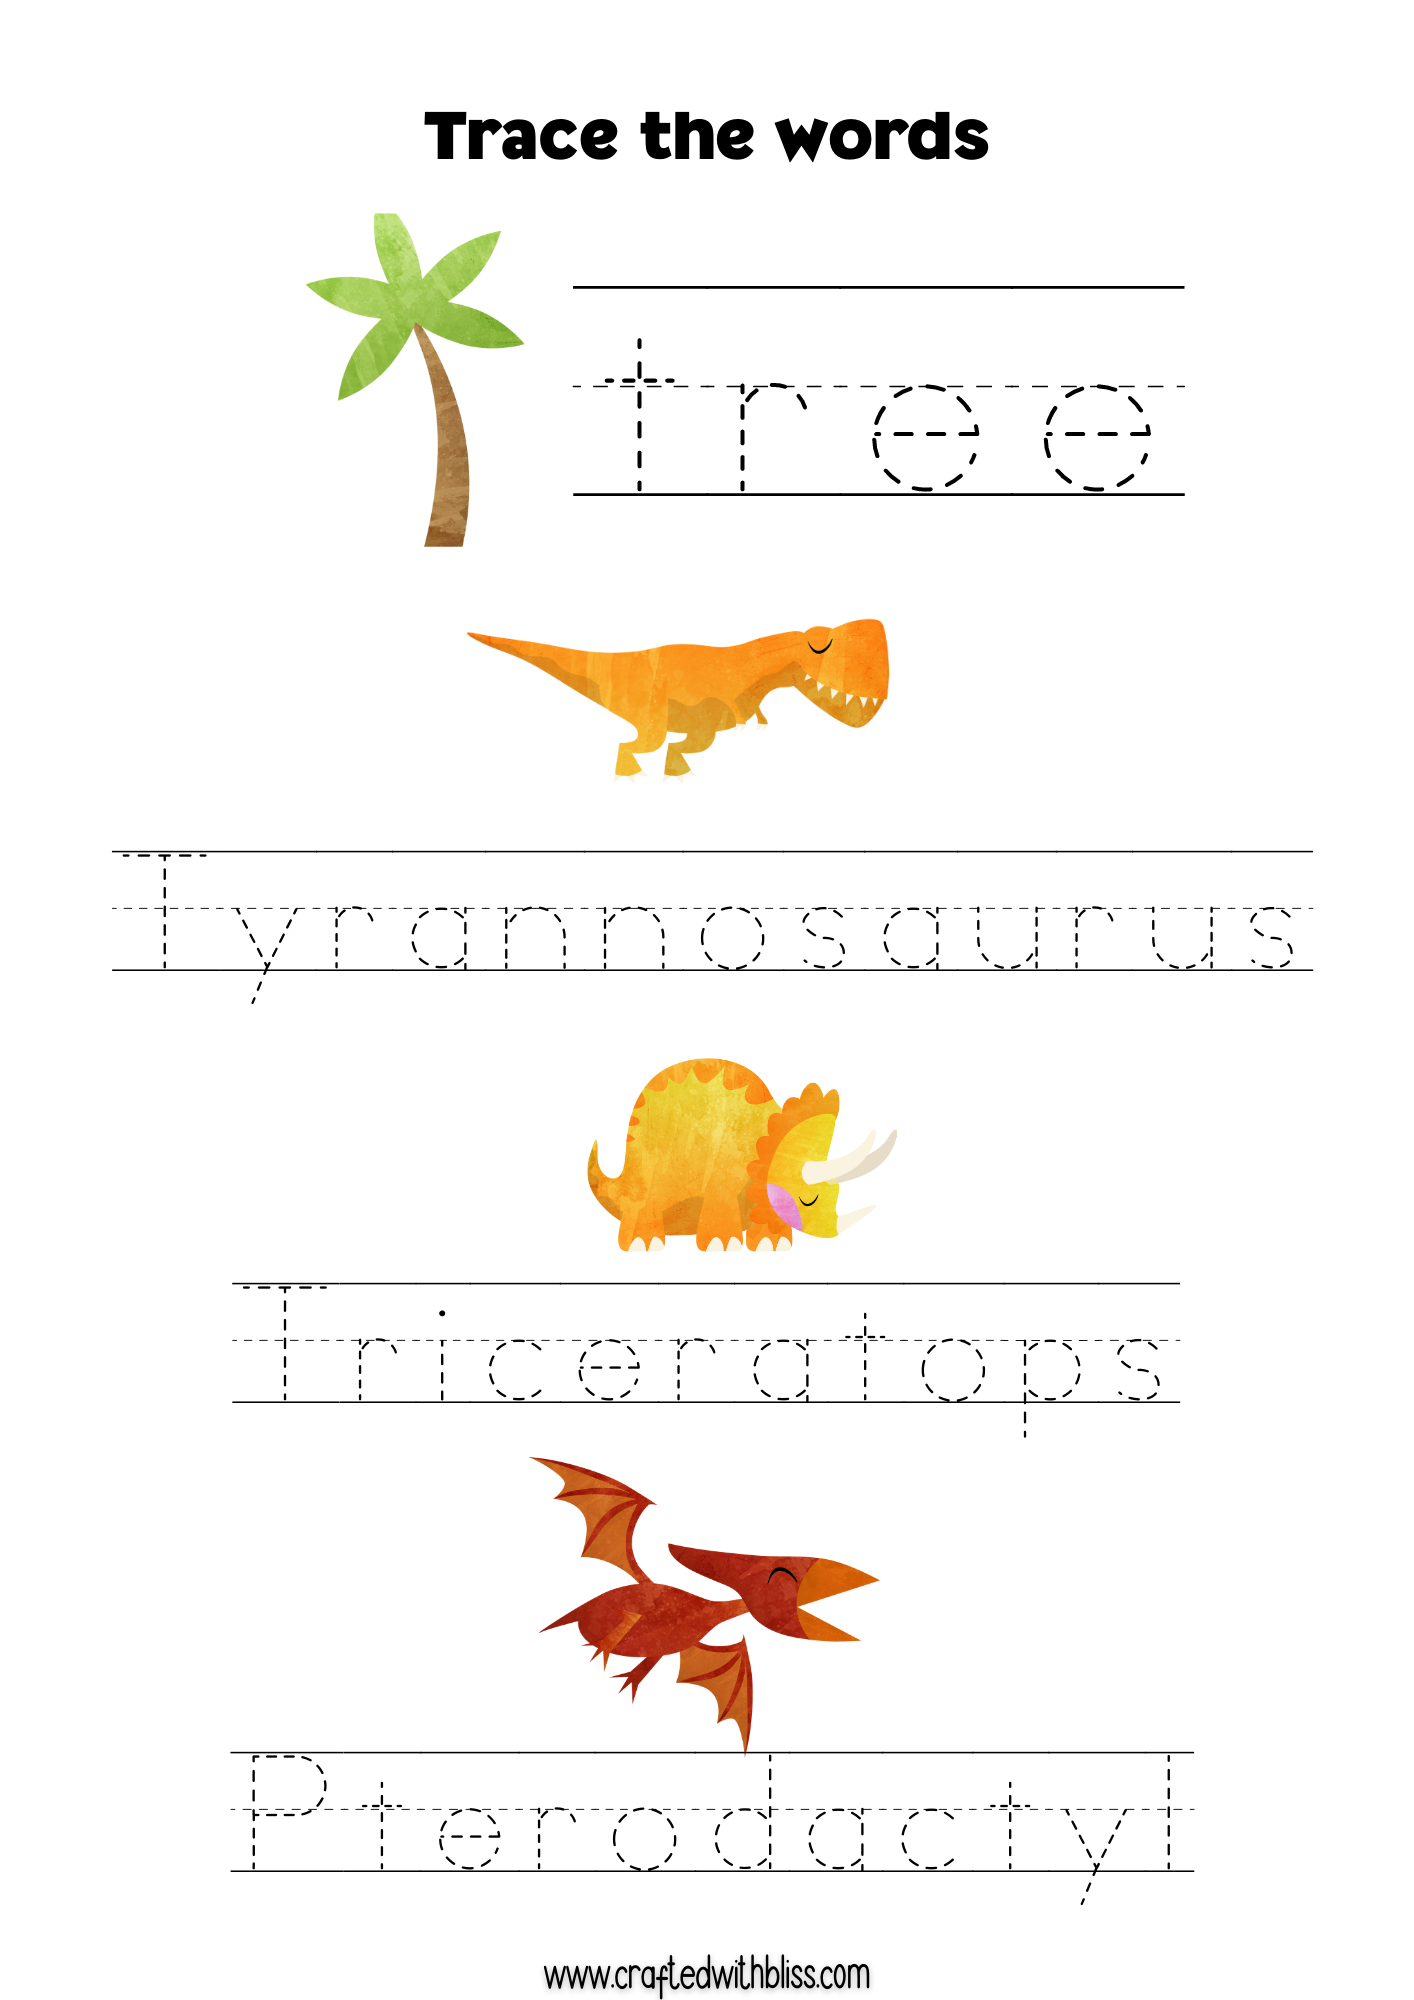 10 Dinosaur BINGO For Preschool-Kindergarten